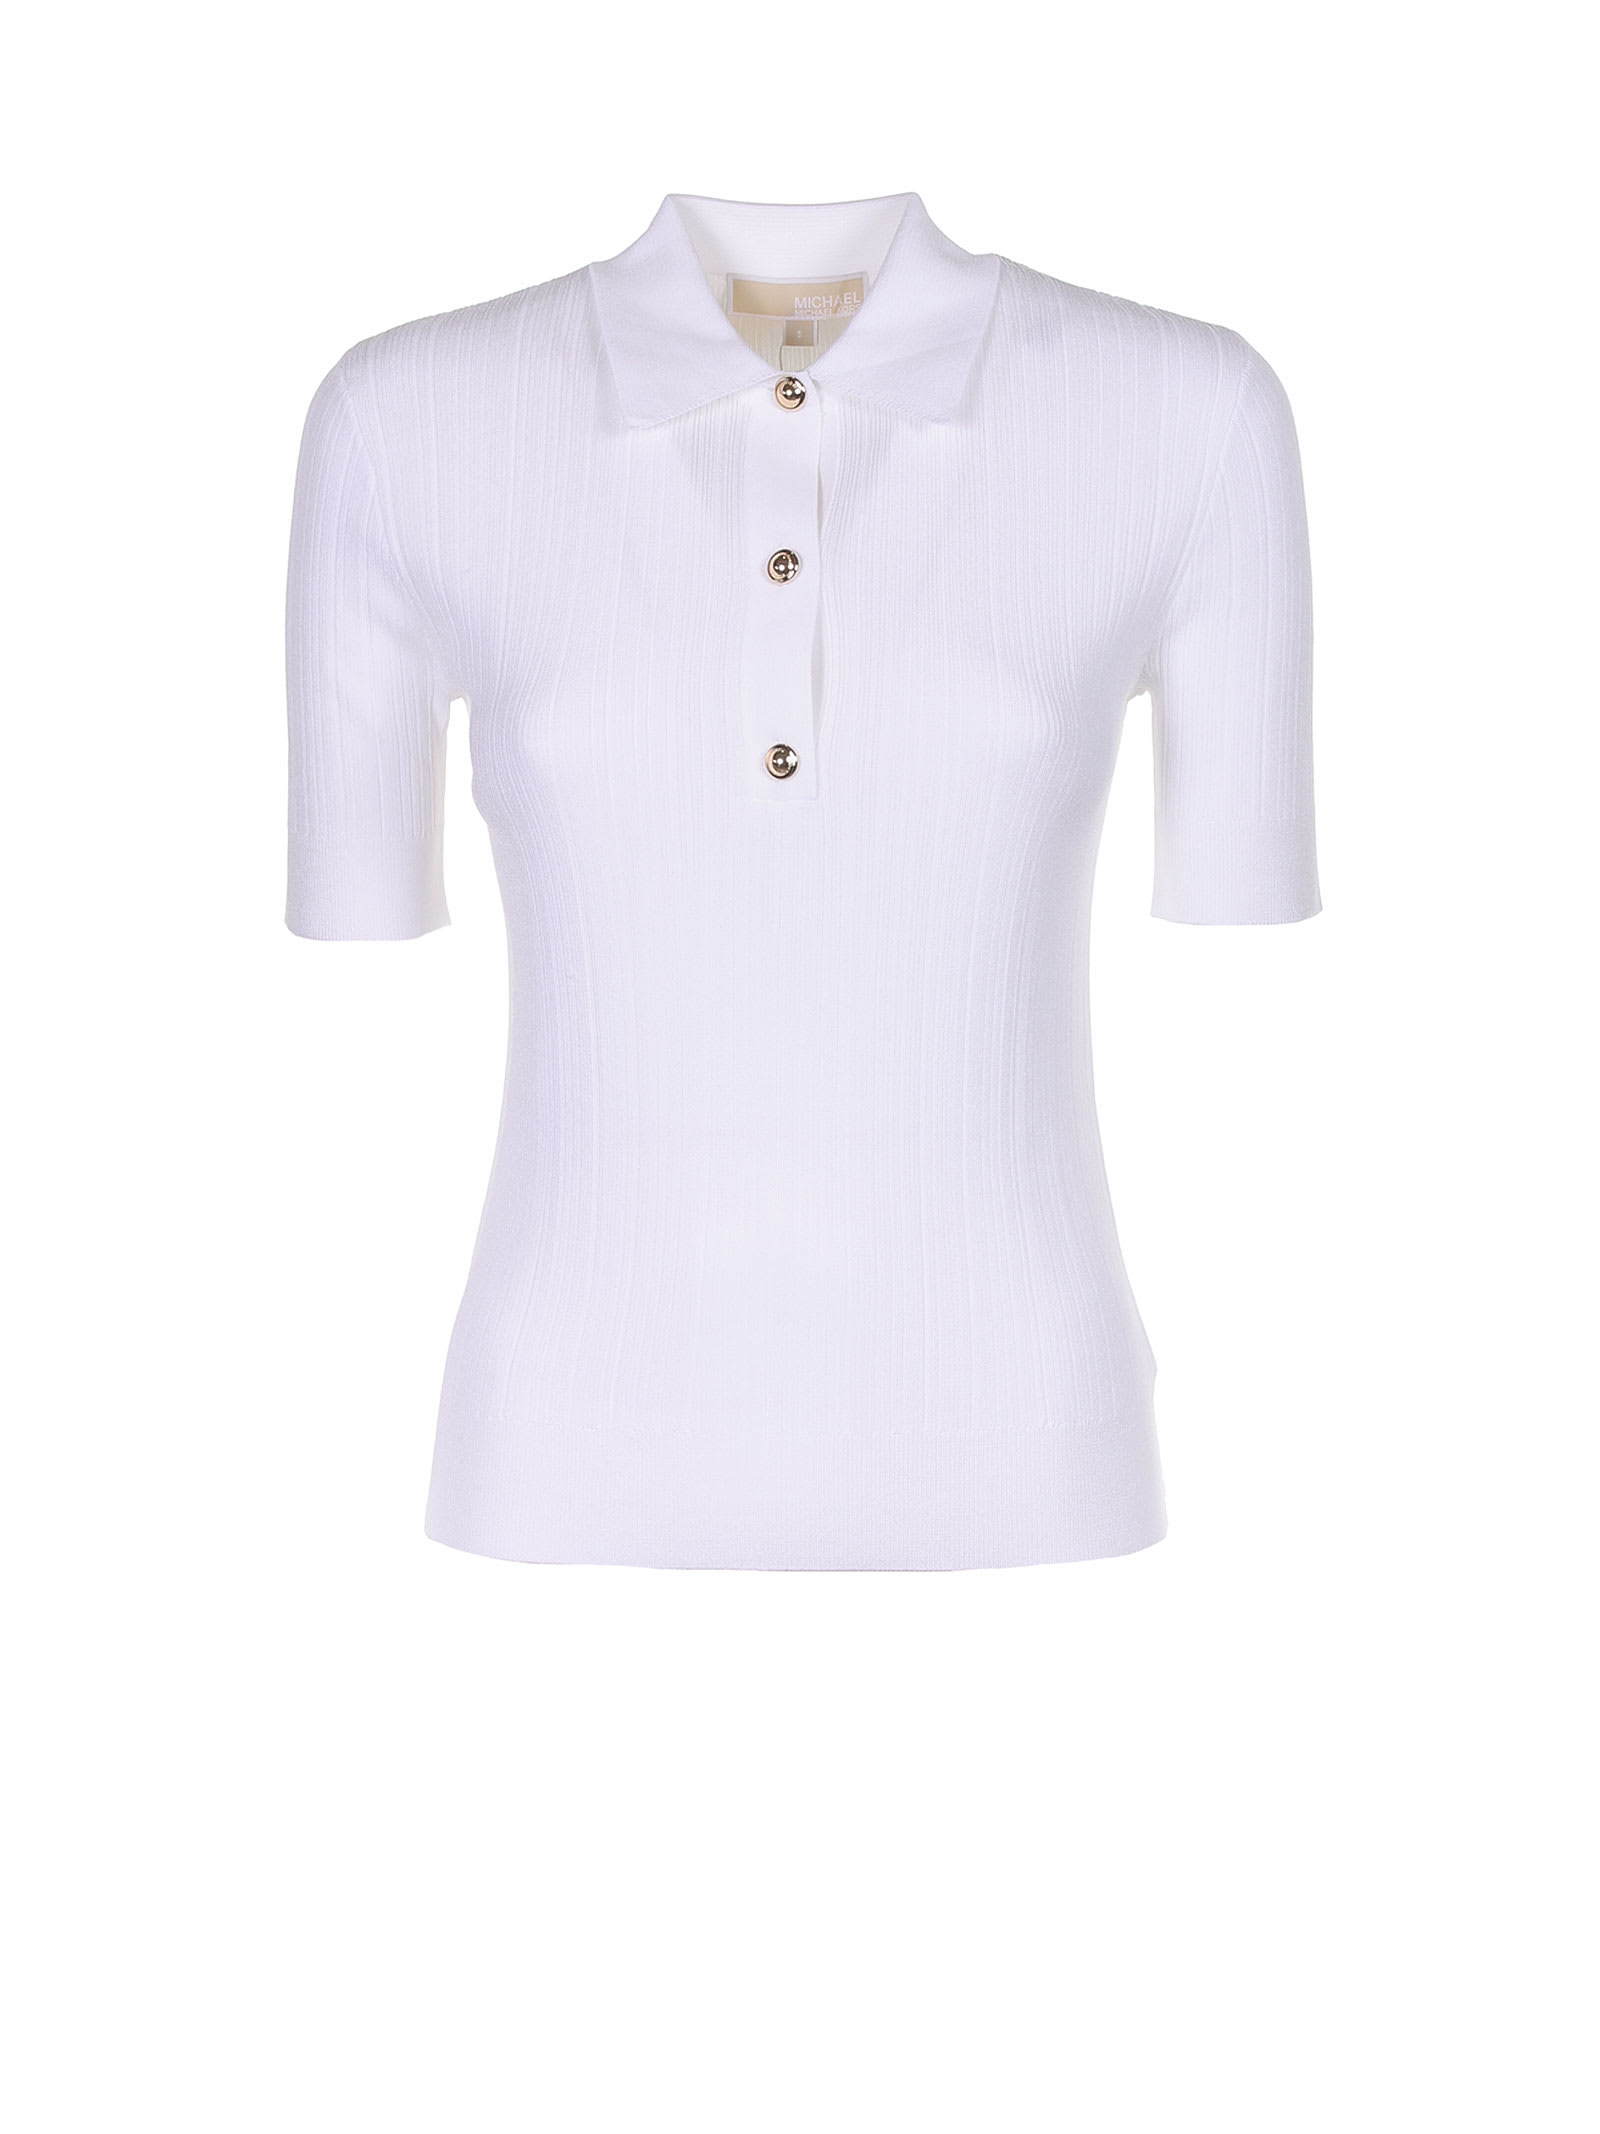 Michael Kors White Polo Shirt